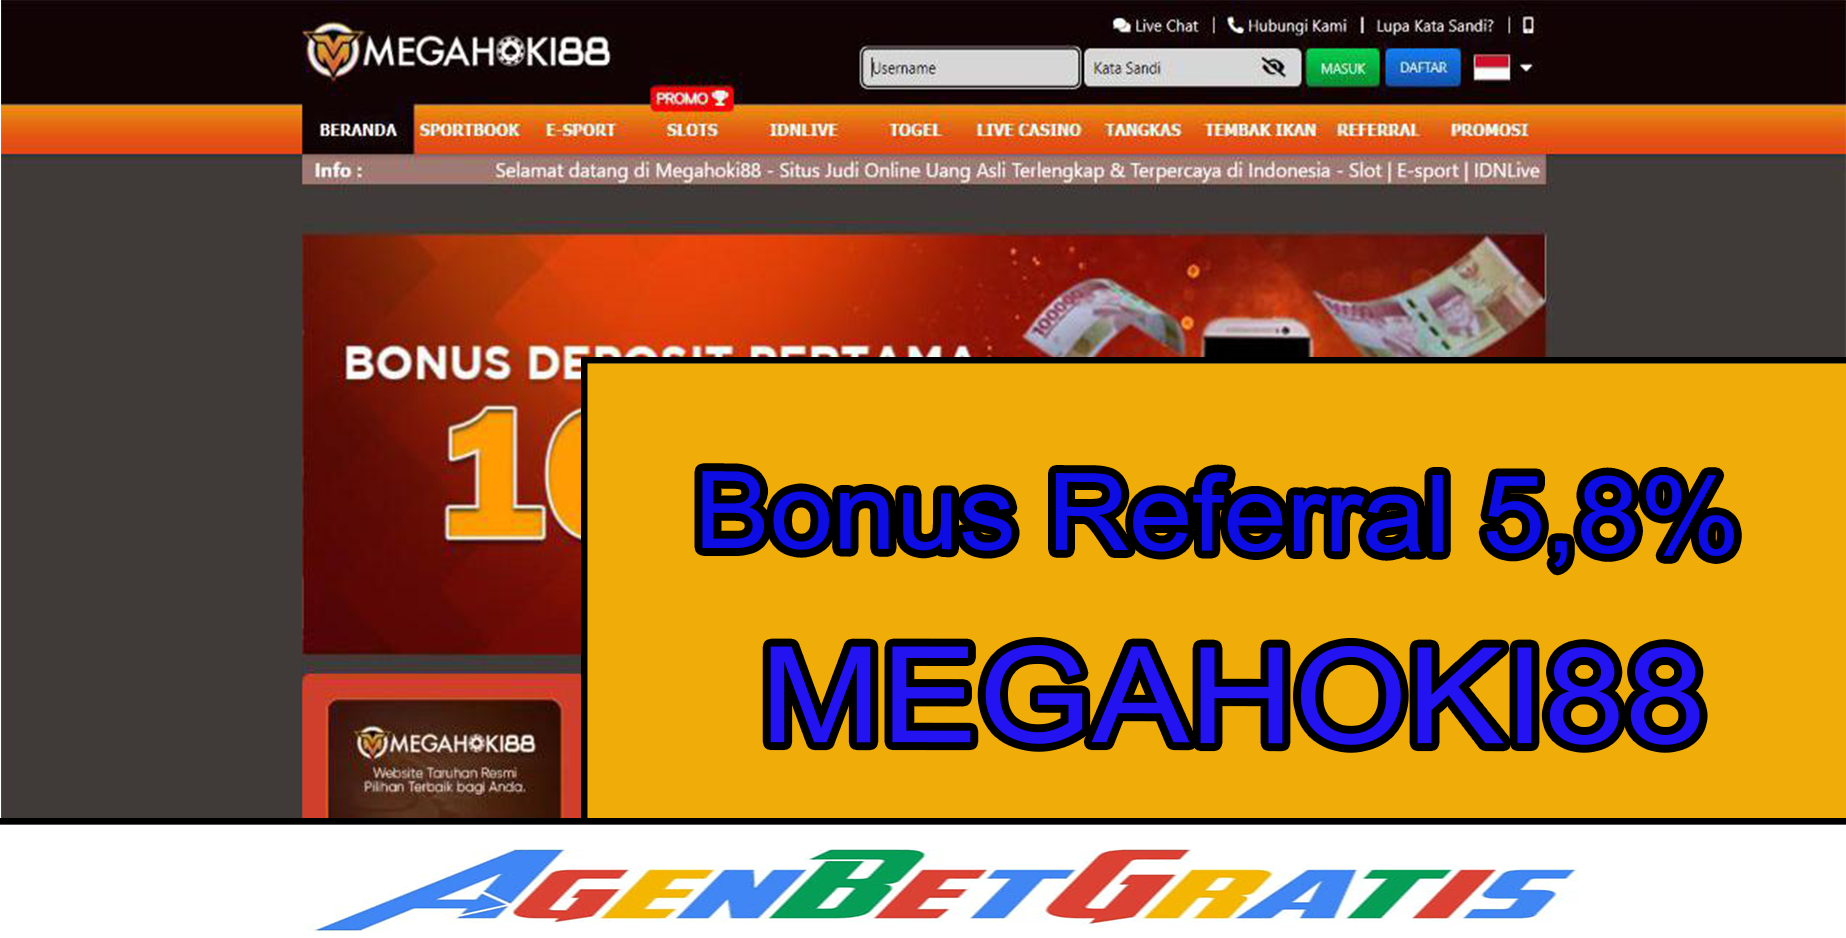 MEGAHOKI88 - Bonus Referral 5,8%